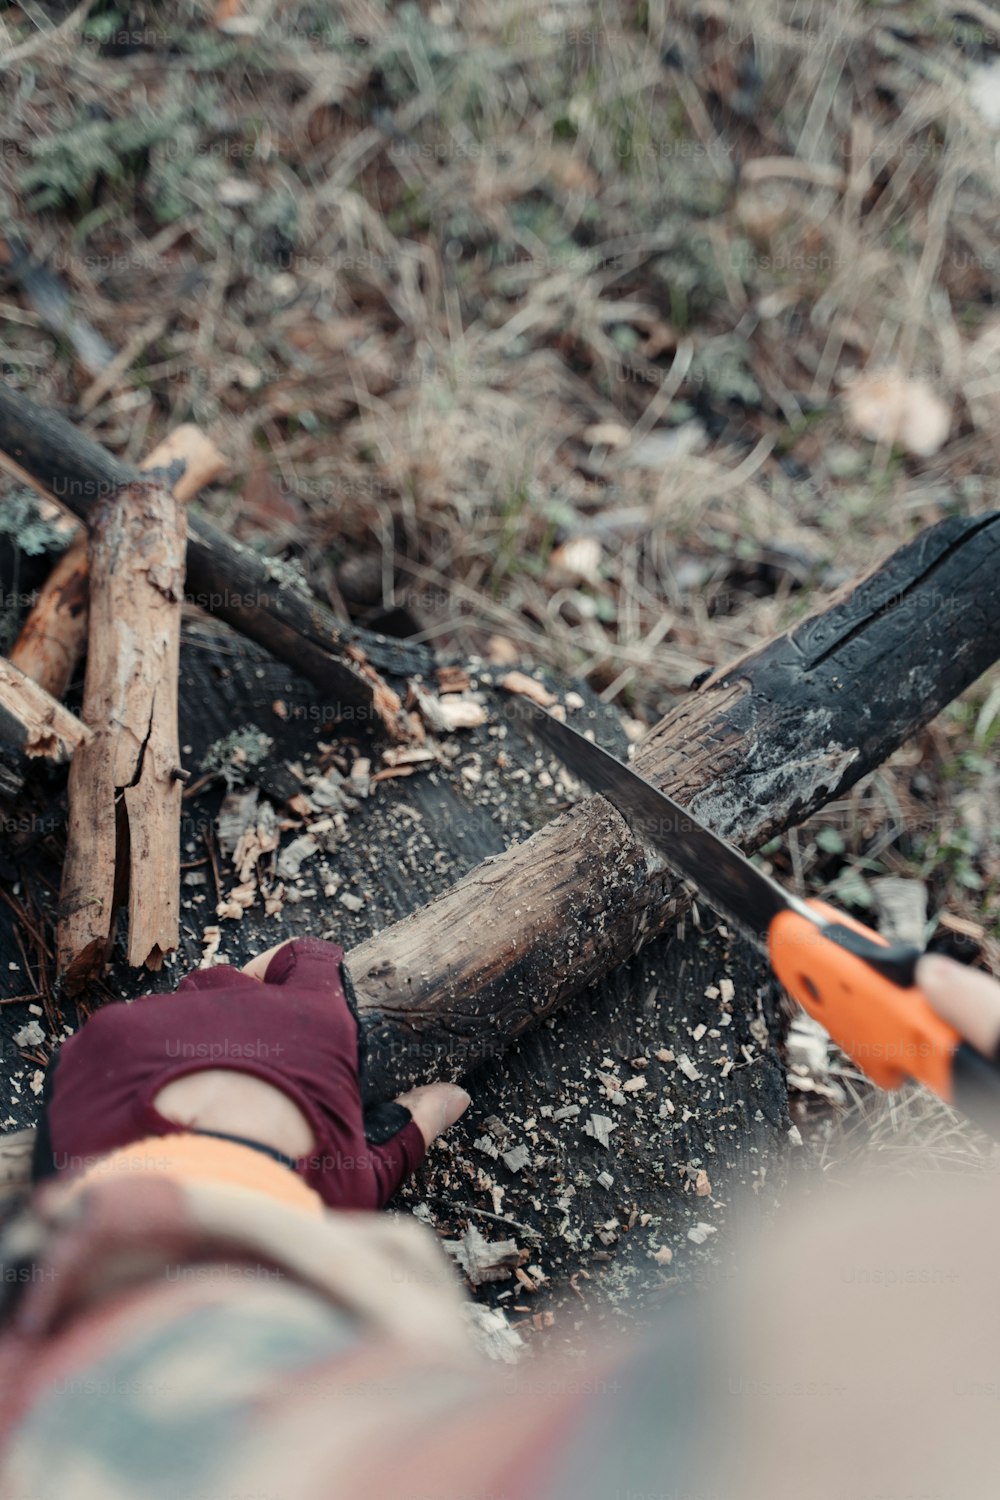 un paio di forbici adagiate sopra una catasta di legna